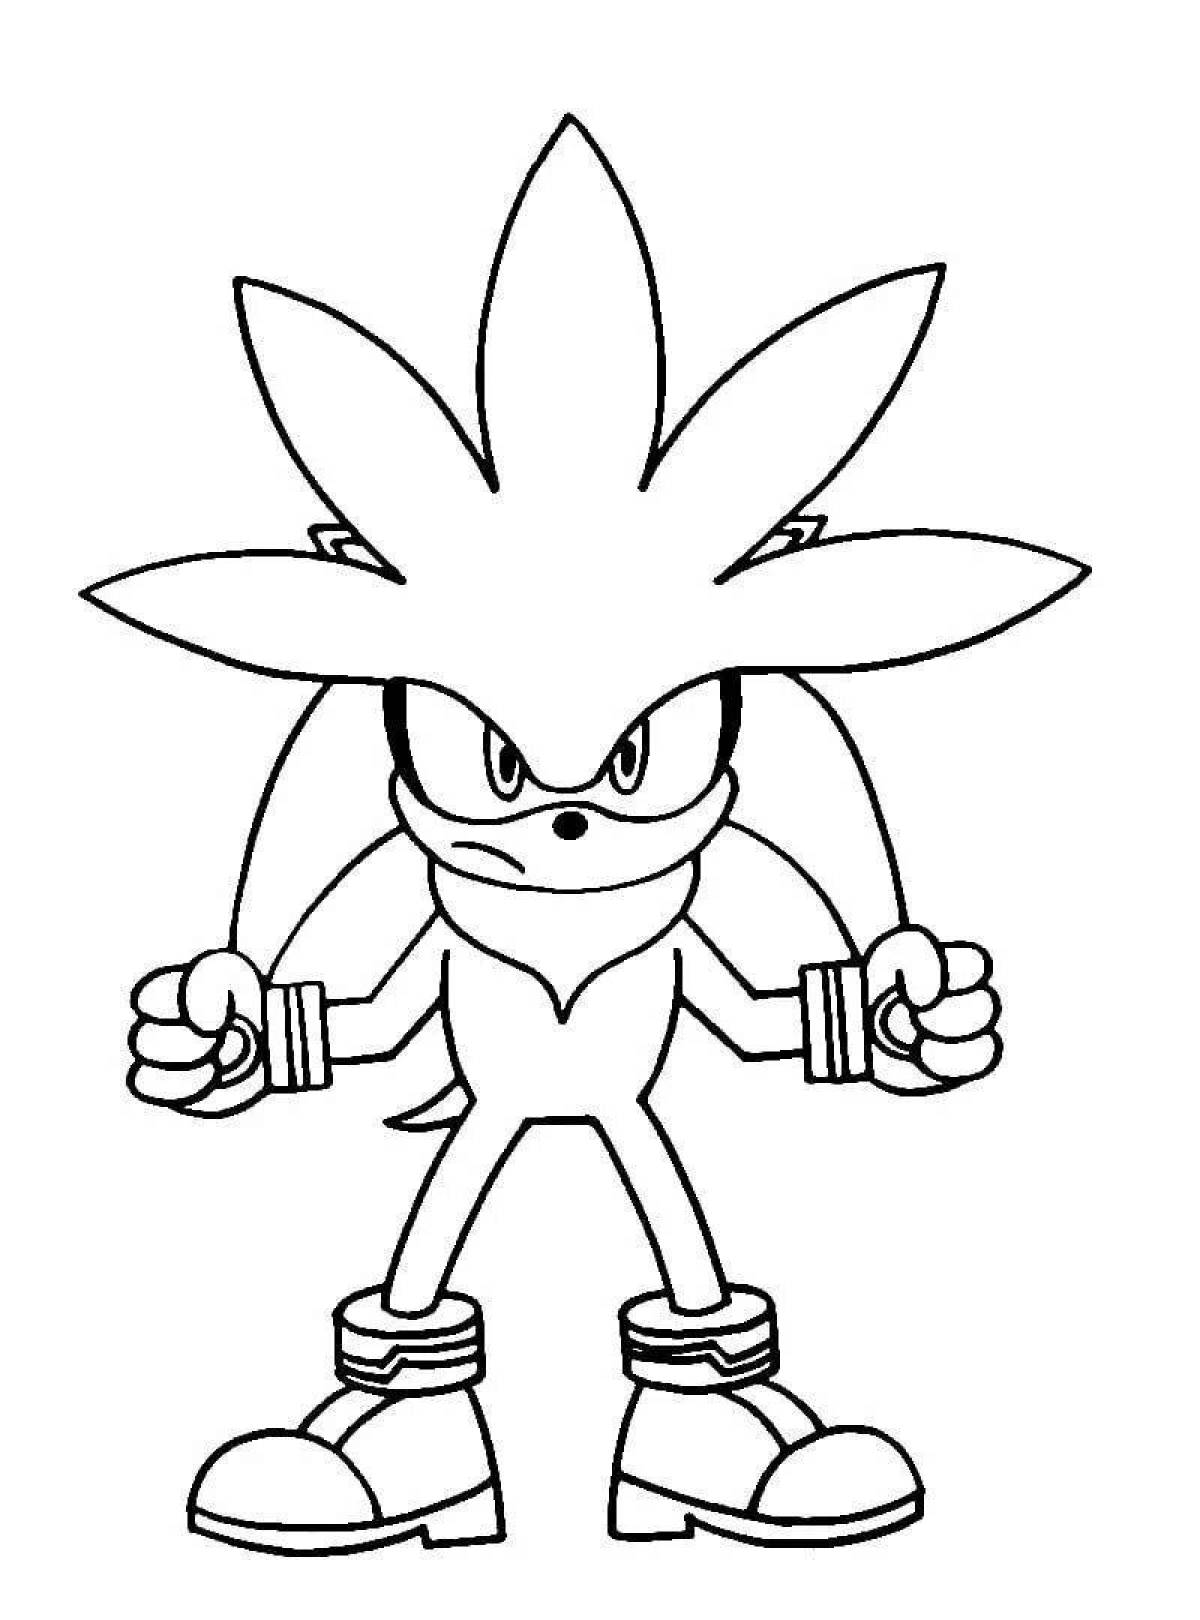 Sonic the hedgehog fantasy coloring book